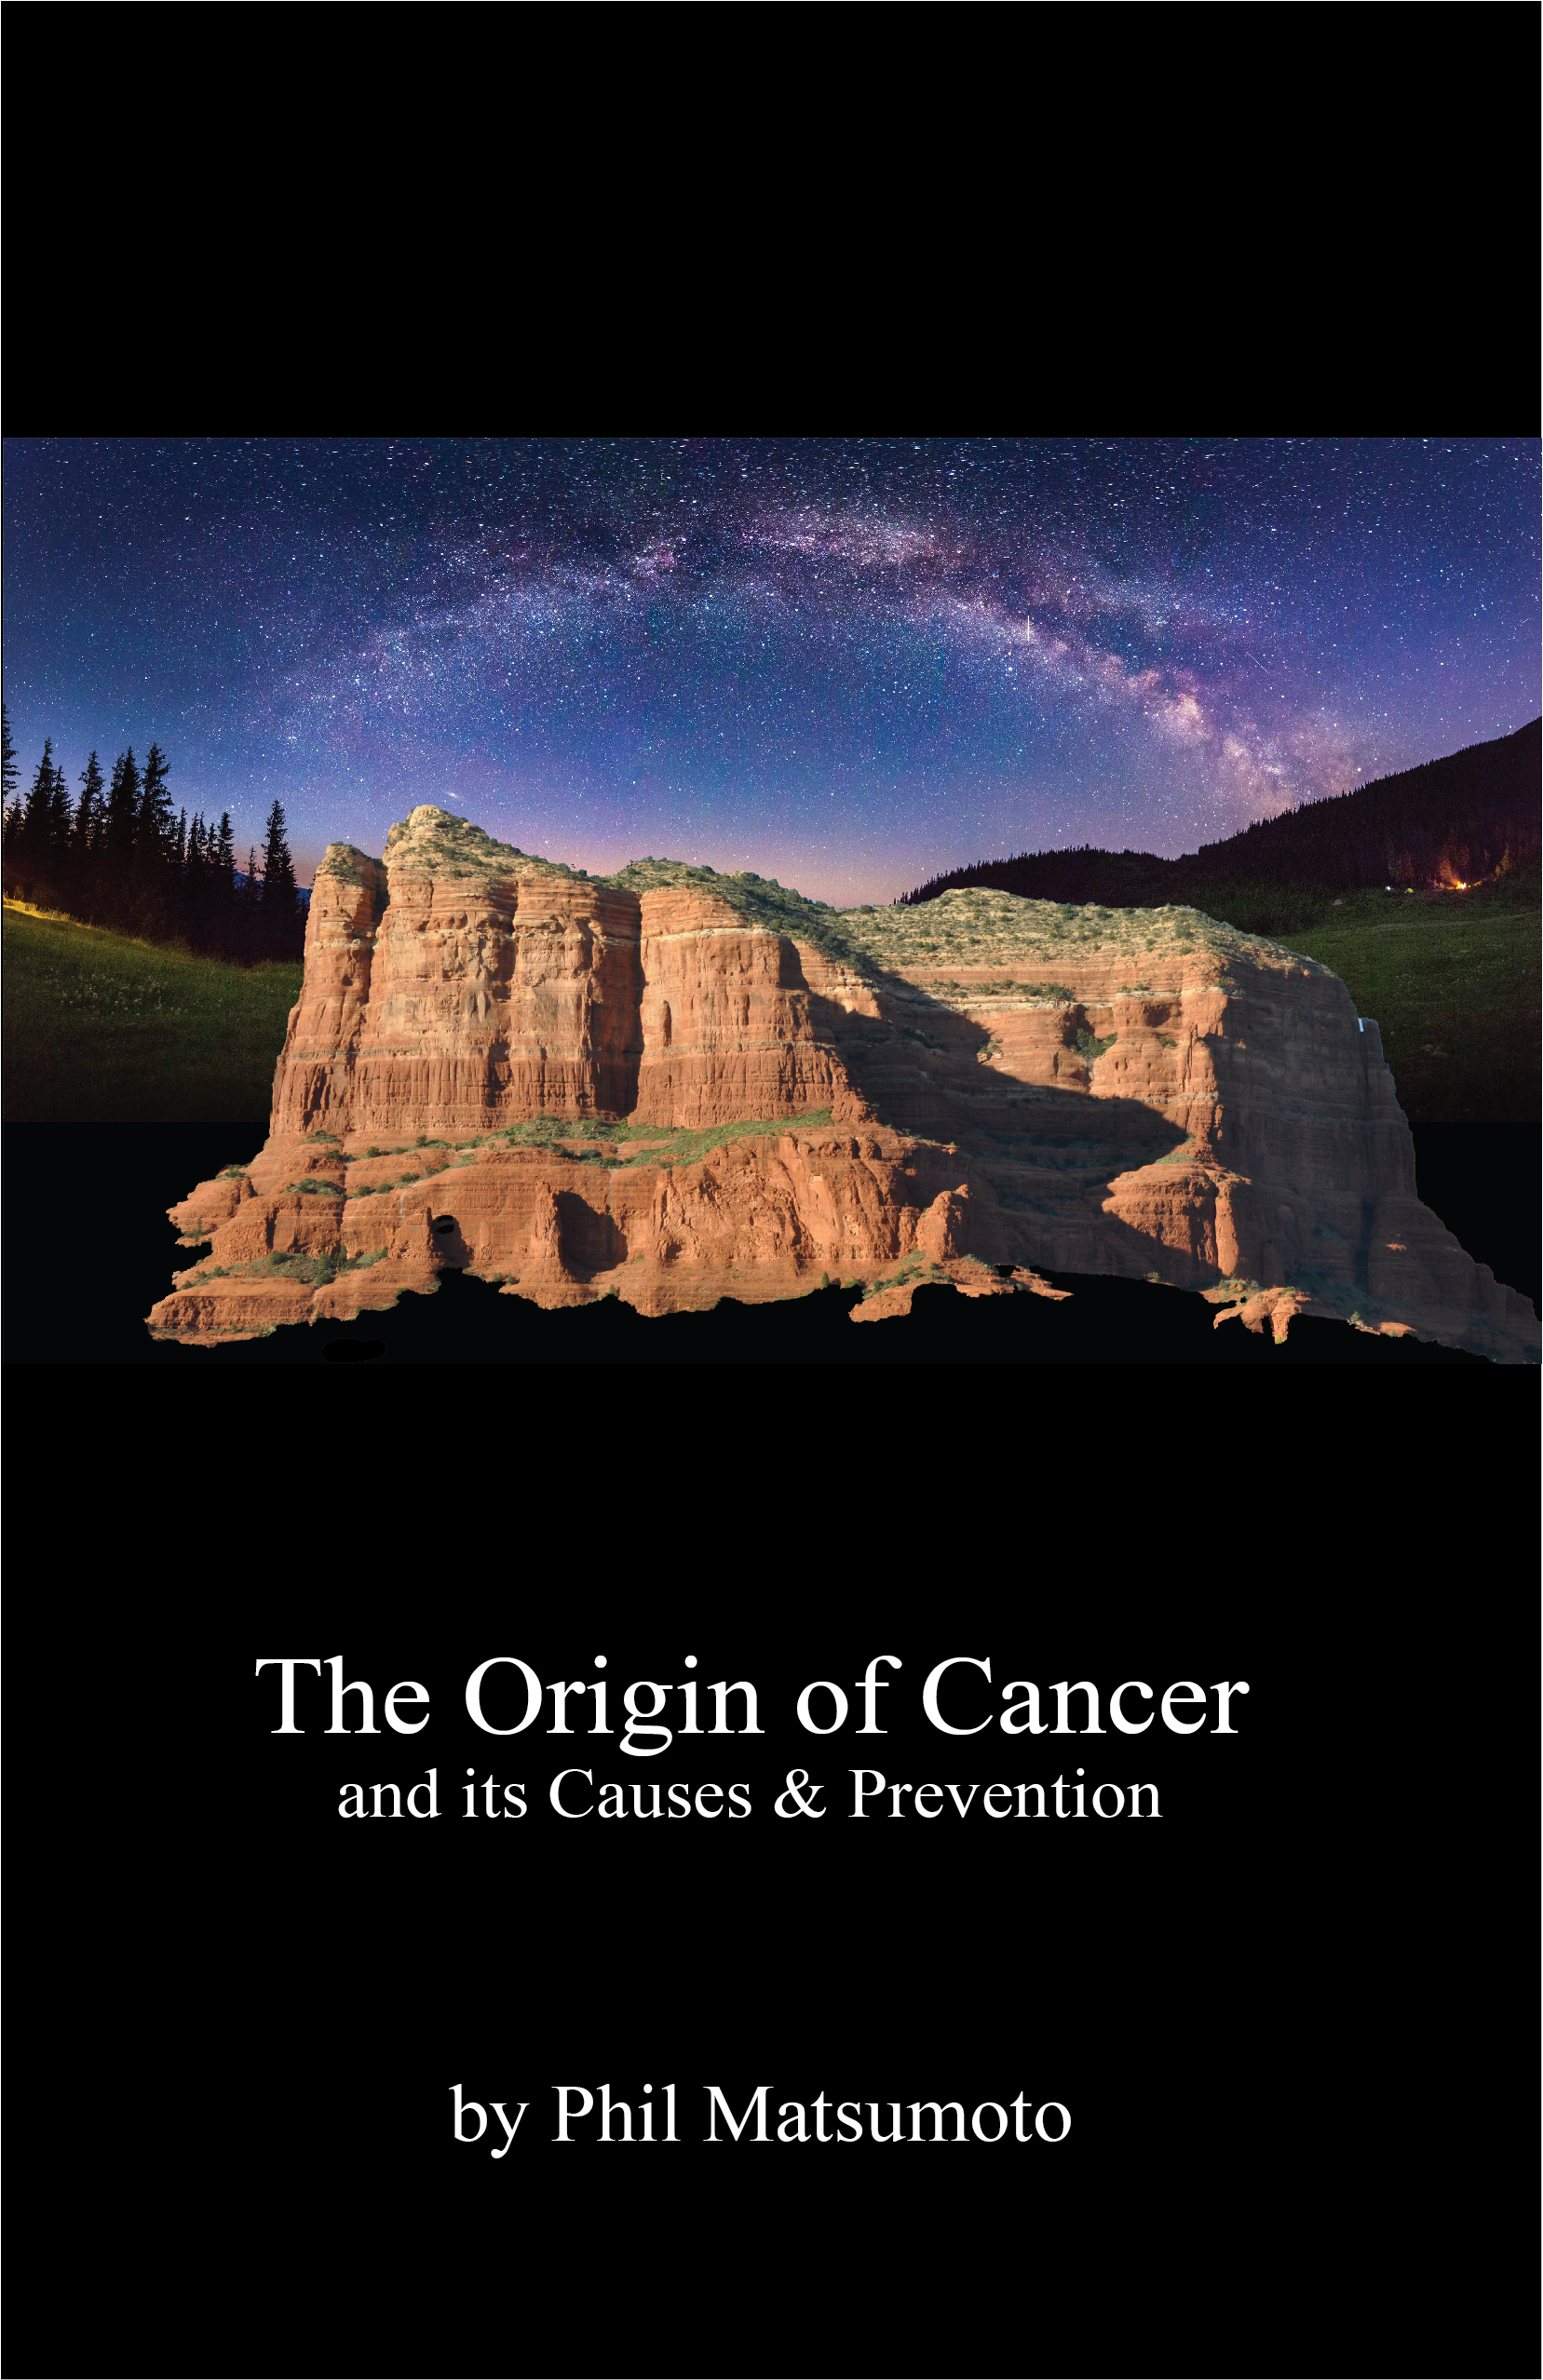 The Origin of Cancer book